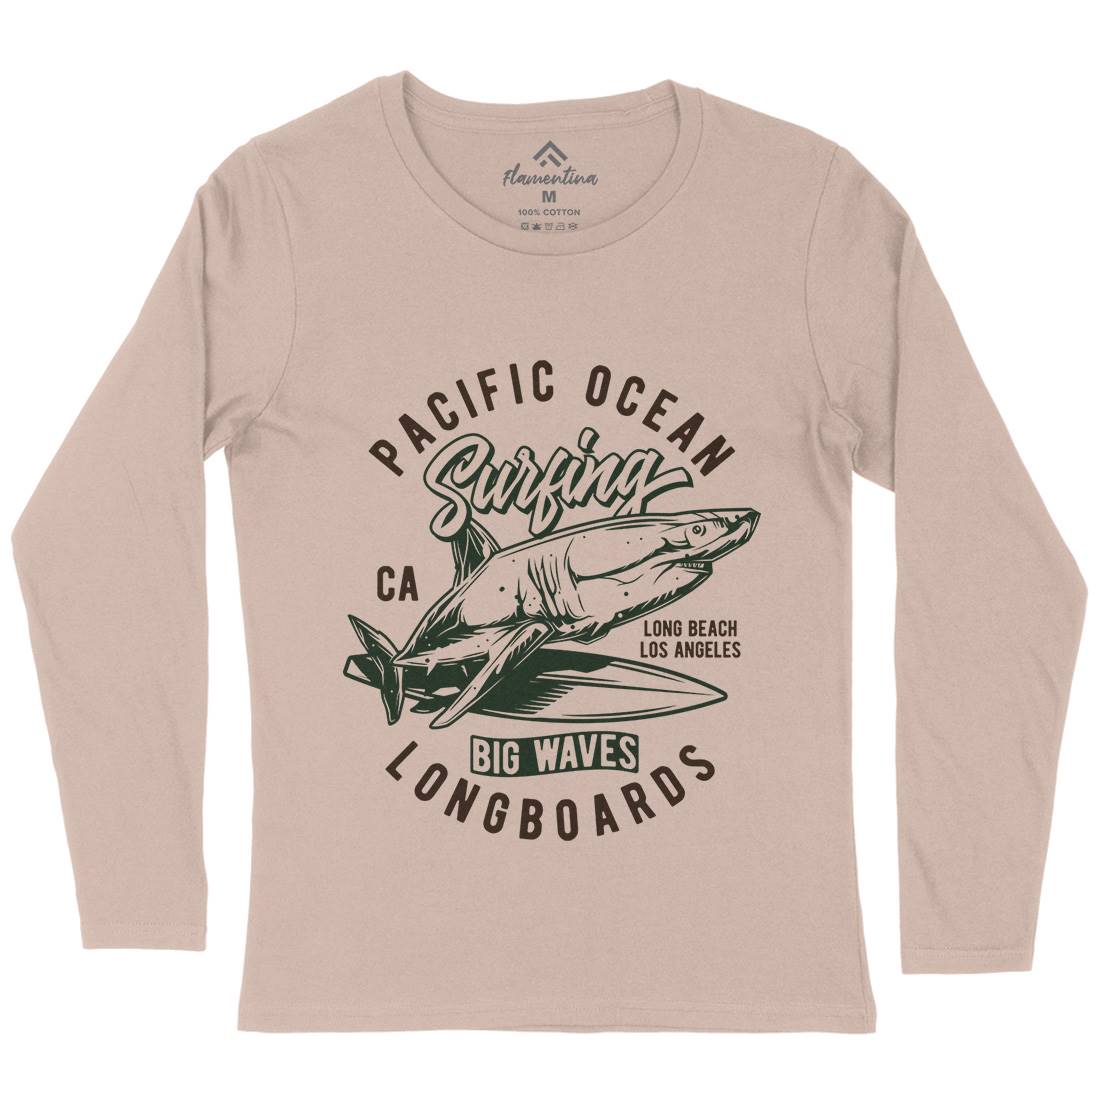 Pacific Ocean Surfing Womens Long Sleeve T-Shirt Surf B869